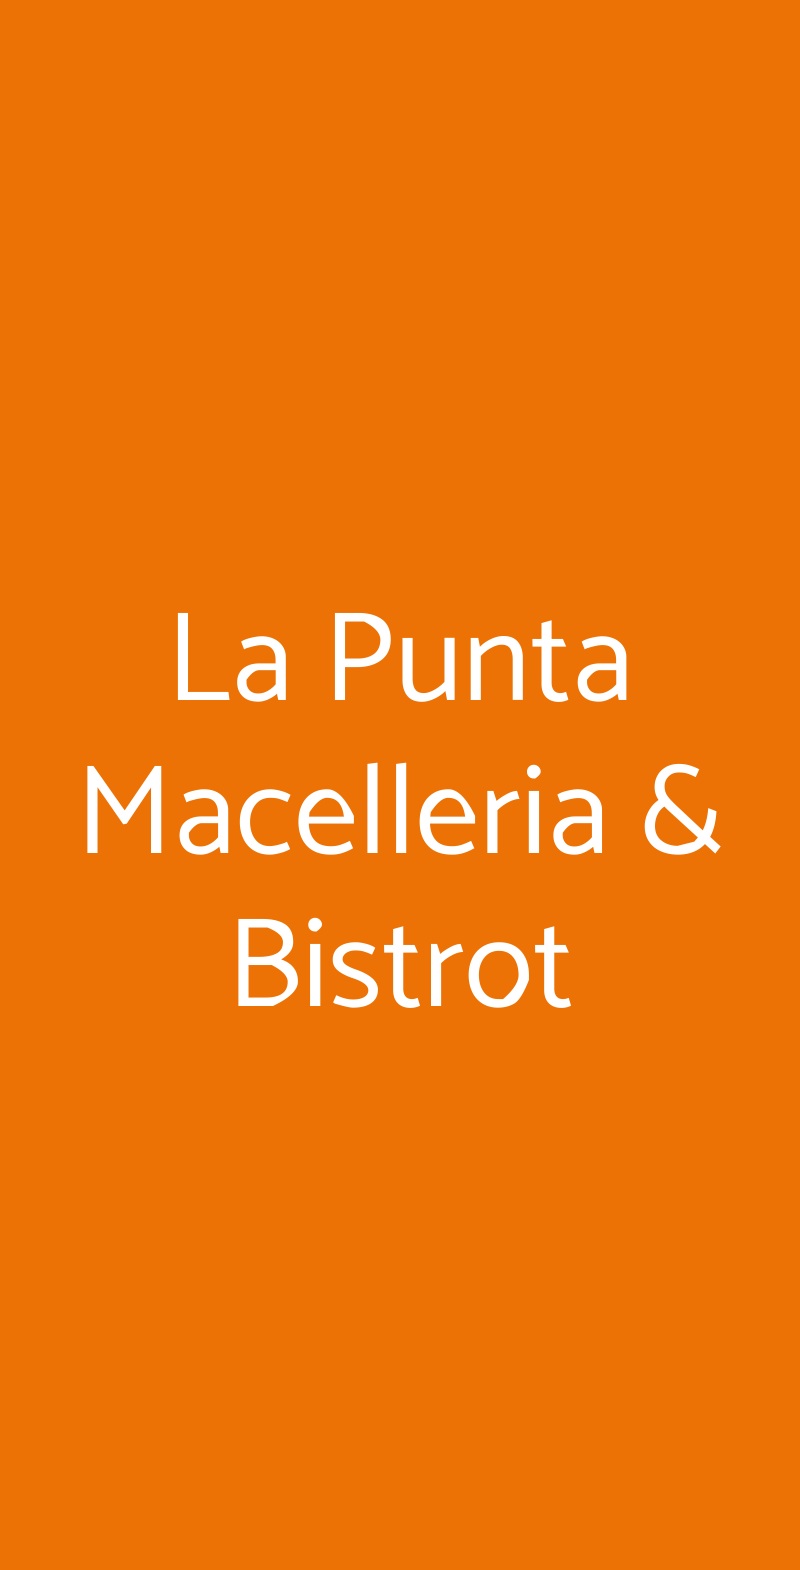 La Punta Macelleria & Bistrot Modena menù 1 pagina